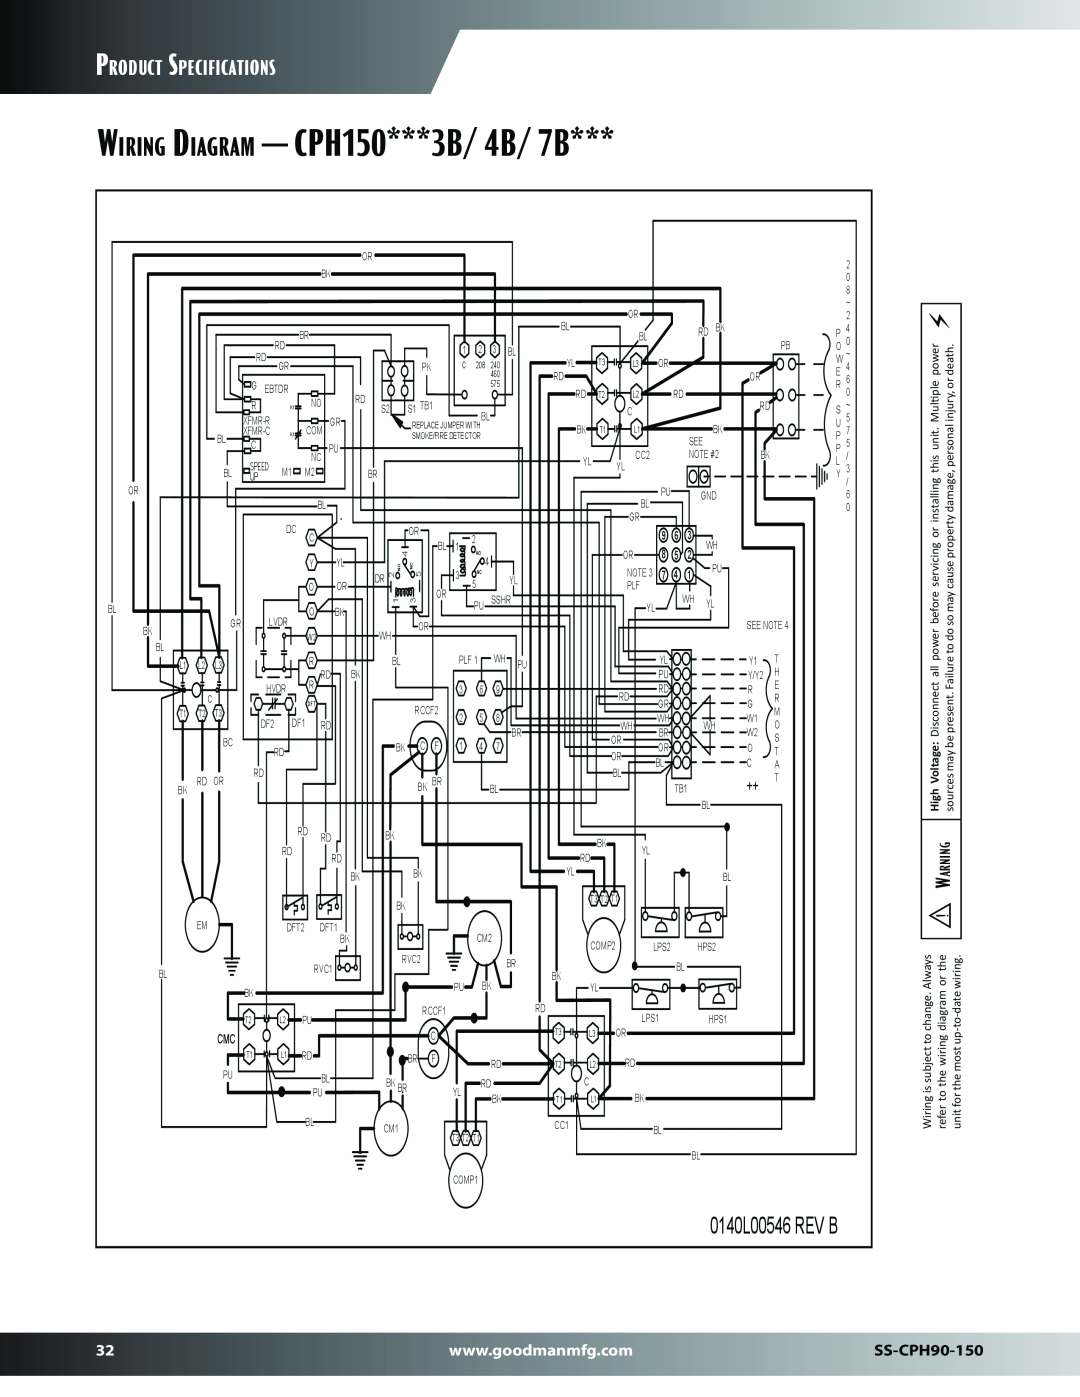 Goodman Mfg SS-CPH90-150 dimensions Wiring Diagram - CPH150***3B/ 4B/ 7B, Product Specifications, 0140L00546 REV B 